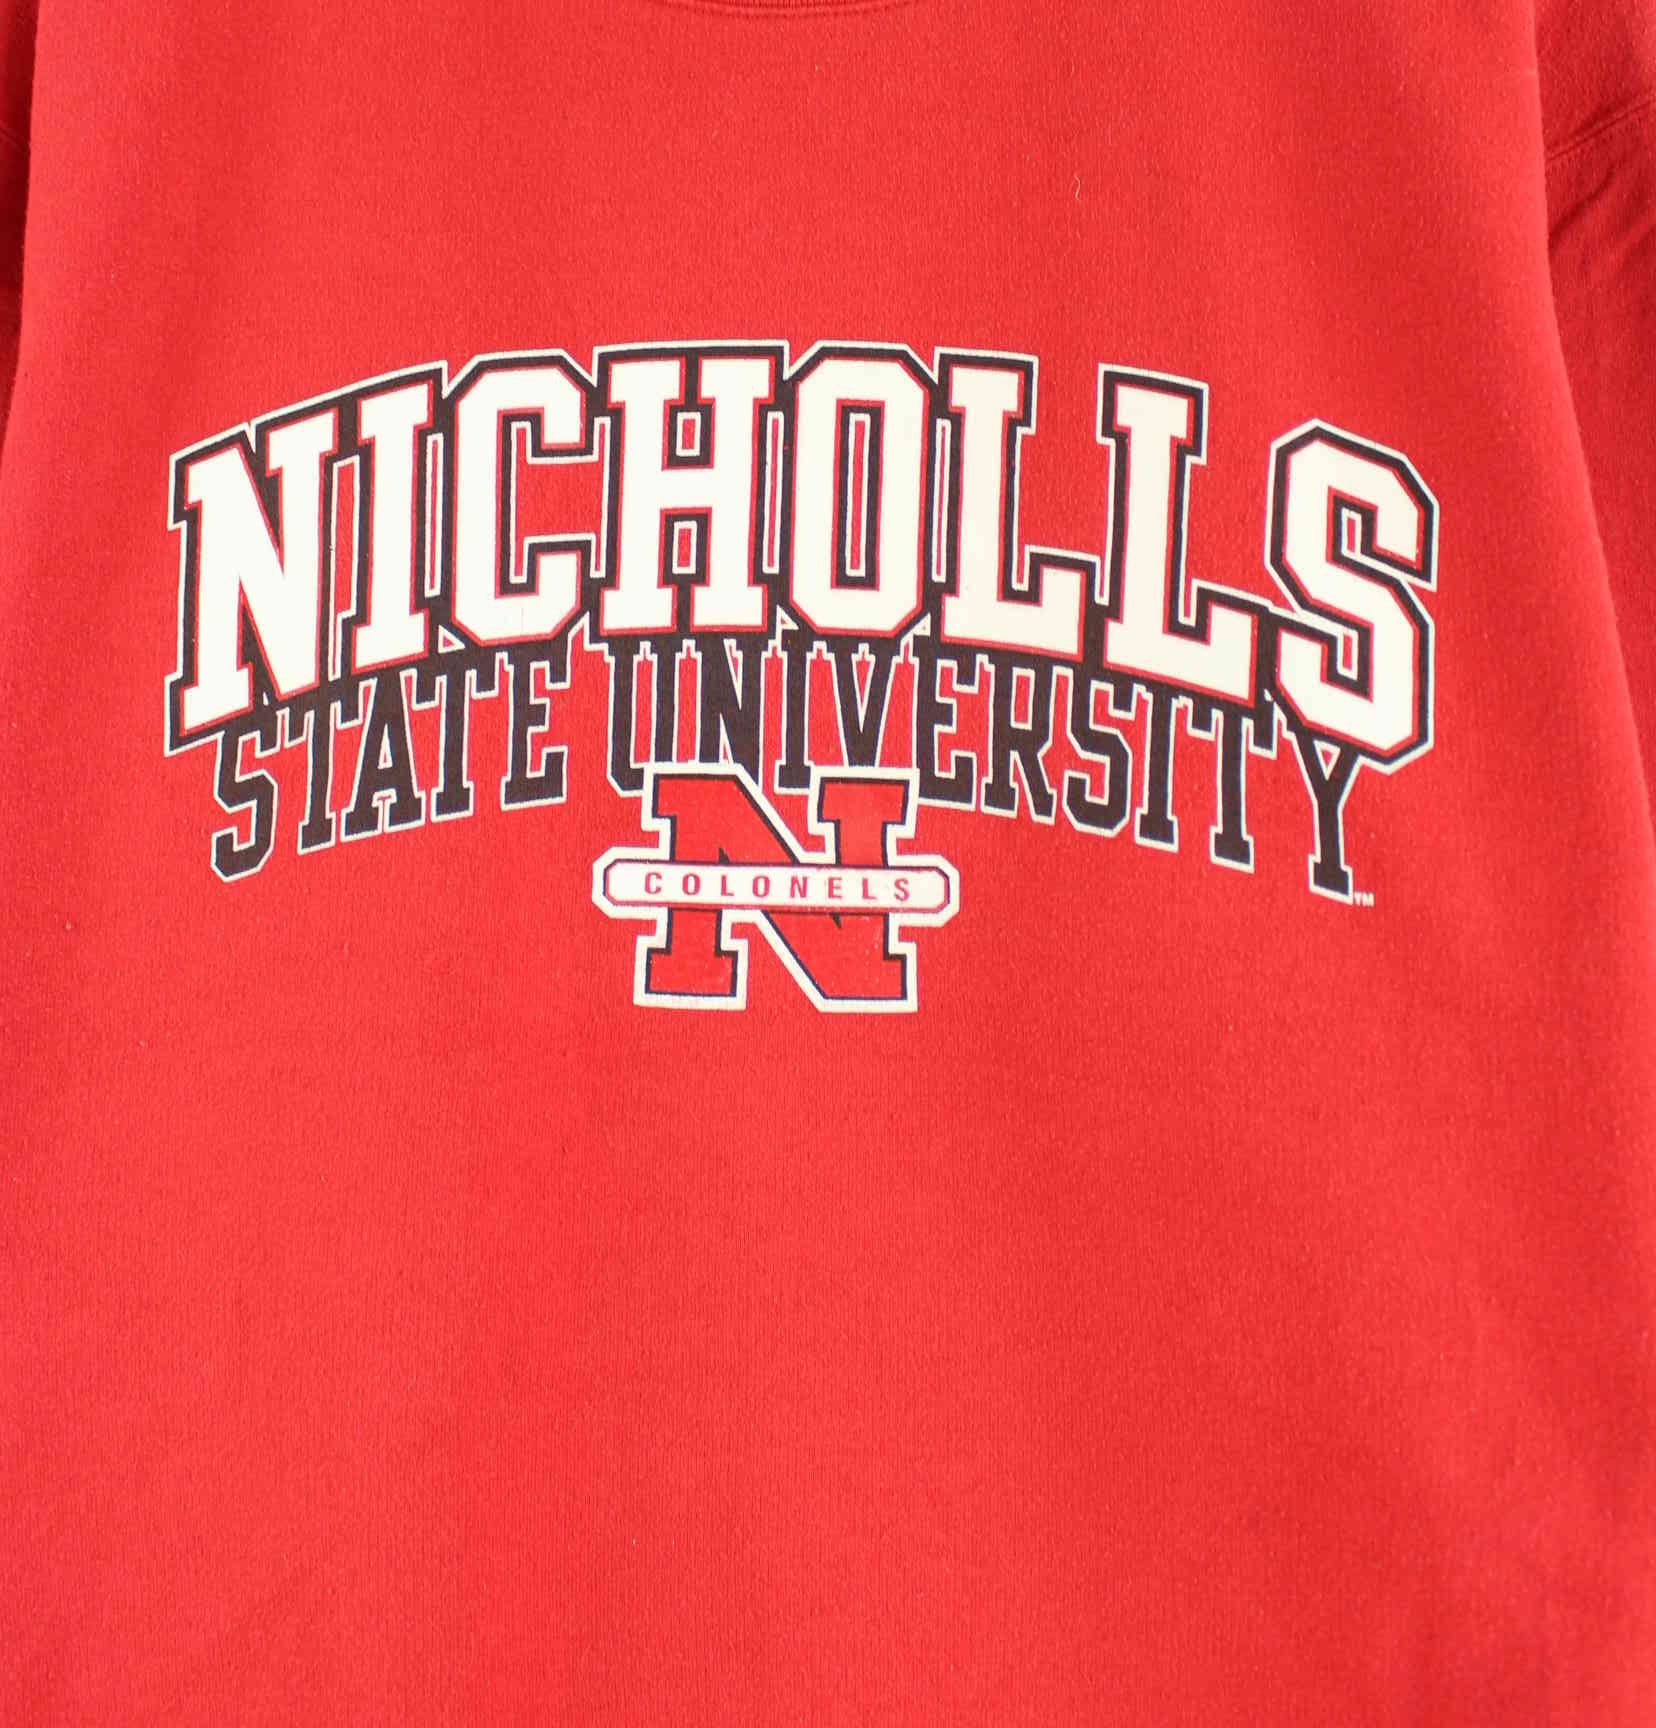 Champion Nicholls State University Print Sweater Rot M (detail image 1)